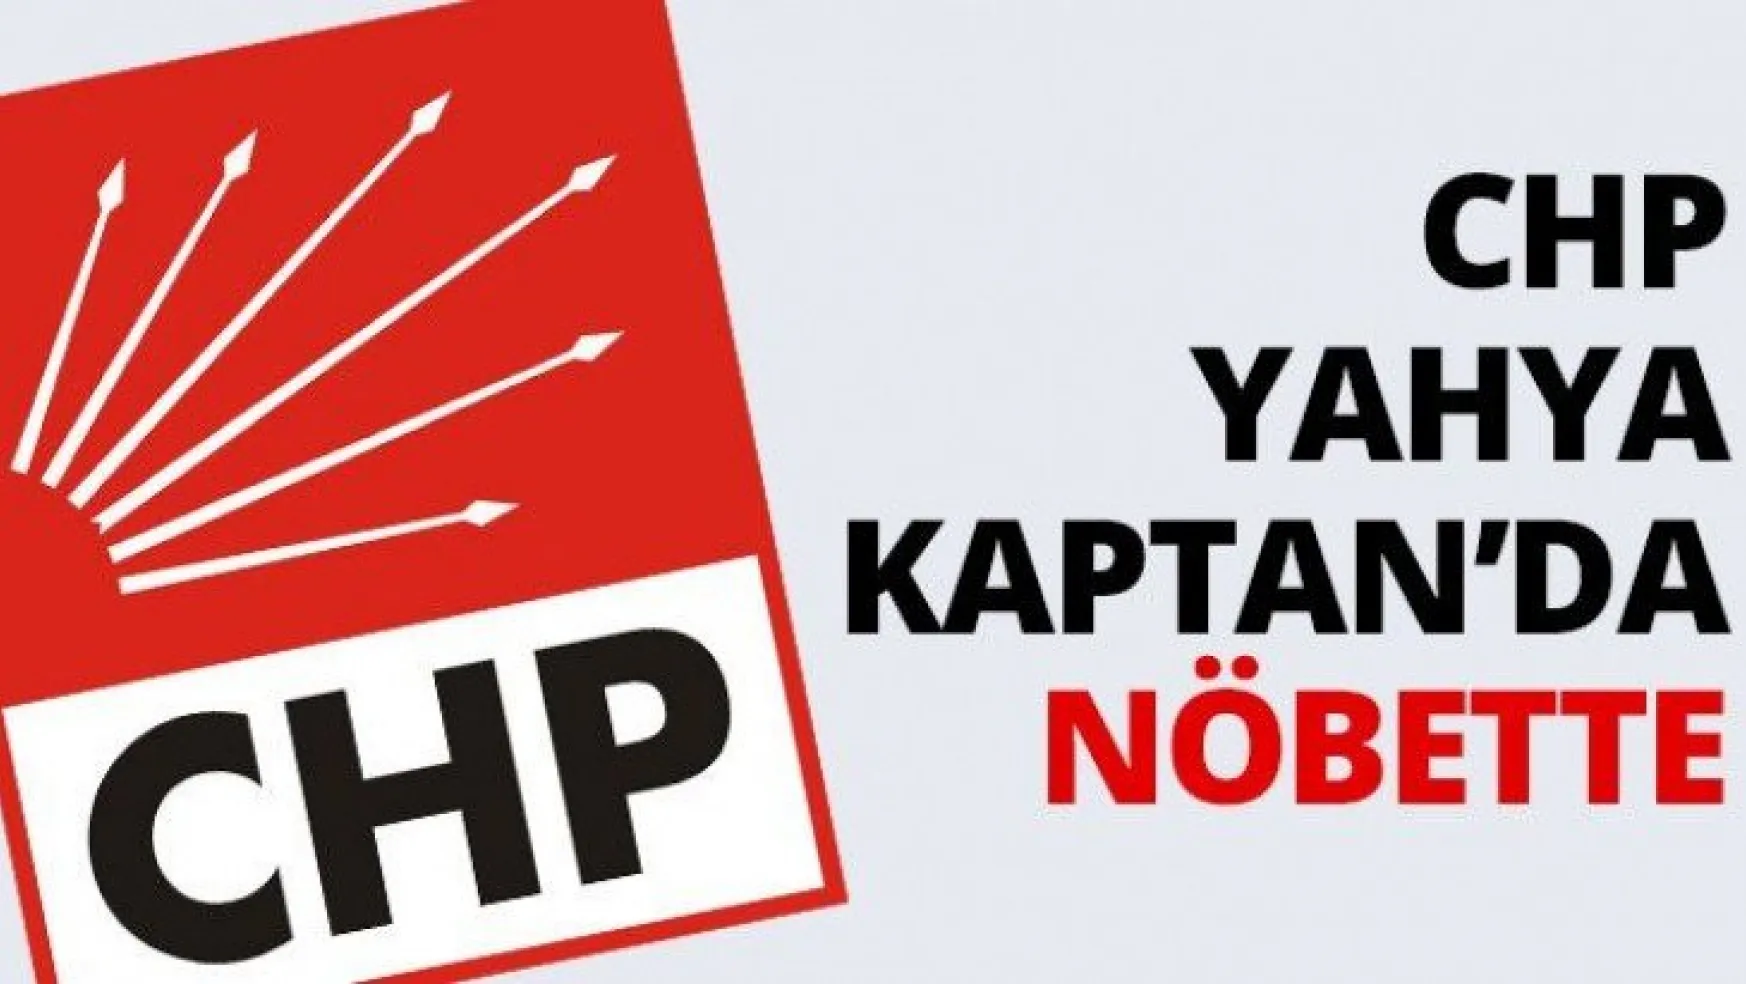 CHP Yahya Kaptan'da nöbette